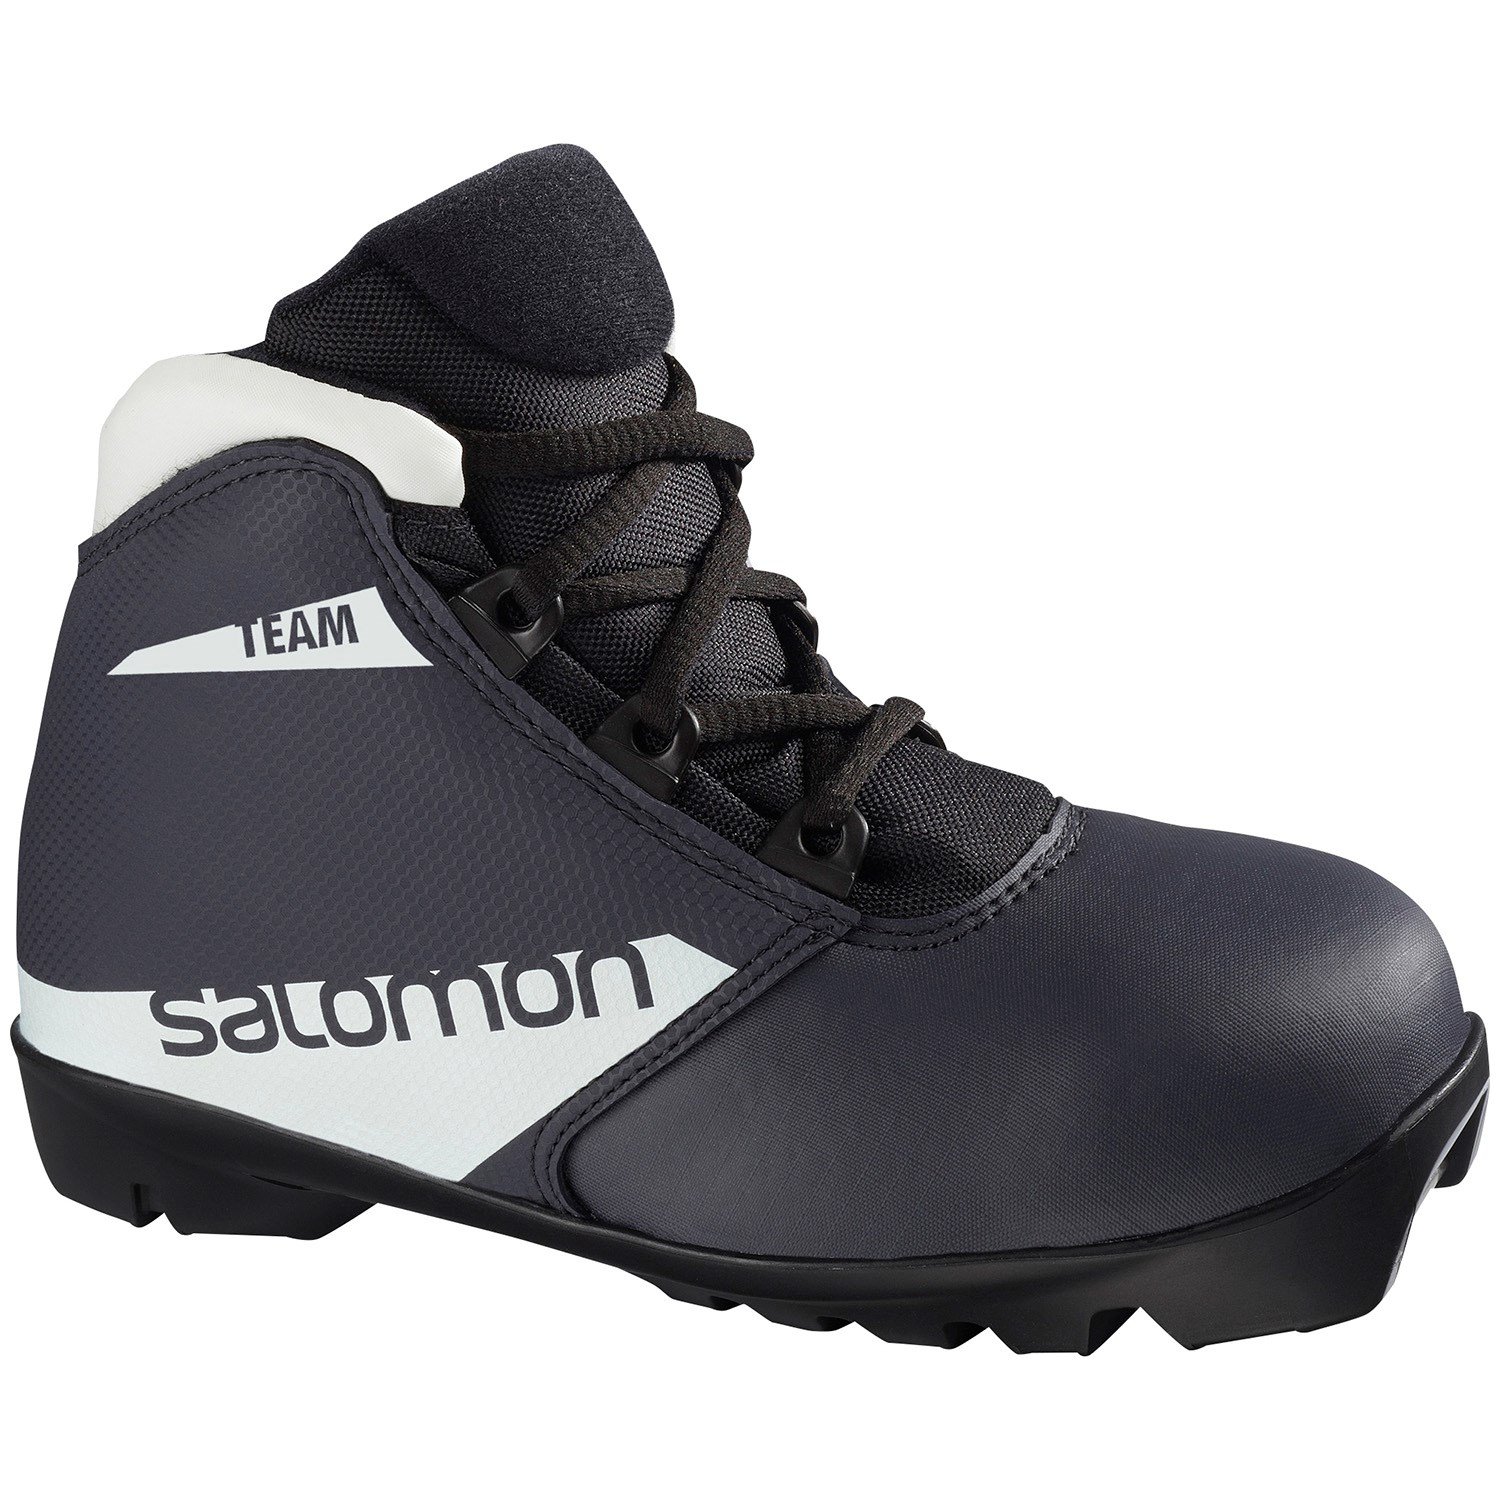 hemmeligt mineral lektie Salomon Team Prolink Jr Classic Cross Country Ski Boots - Kids' 2021 | evo